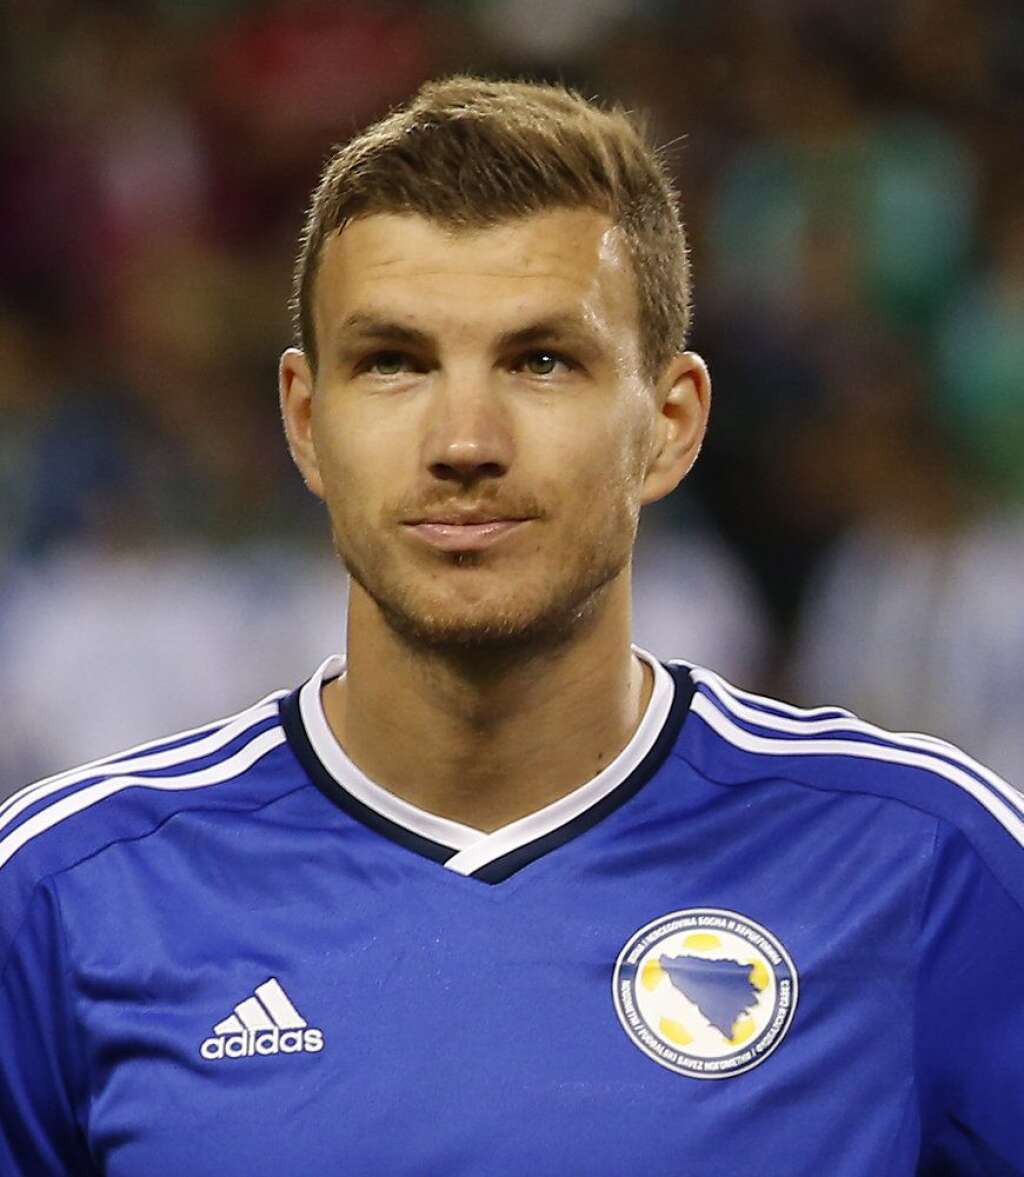 Edin Dzeko (Bosnie-Herzégovine) - Son club: Manchester City (Angleterre) Poste: attaquant